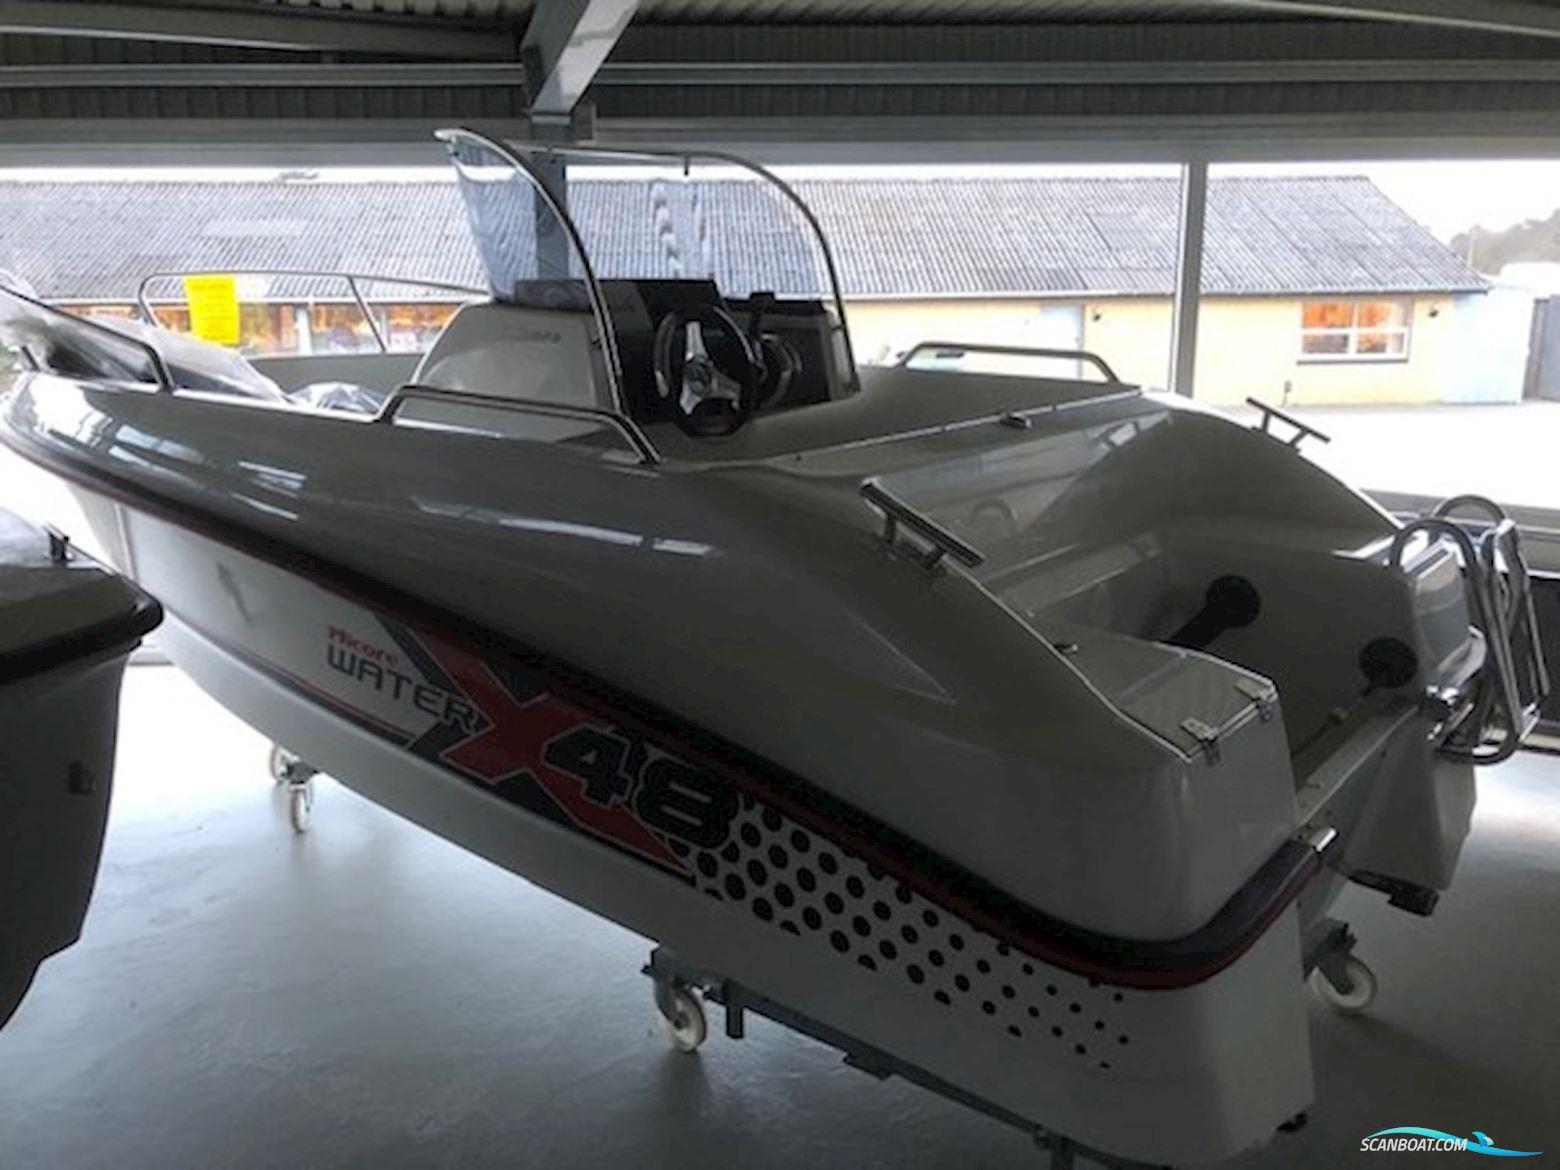 Micore X 48 Med Mercury F60 Efi Elpt - Garmin Navigation/Ekkolod Motorbåd 2021, med Mercury motor, Danmark